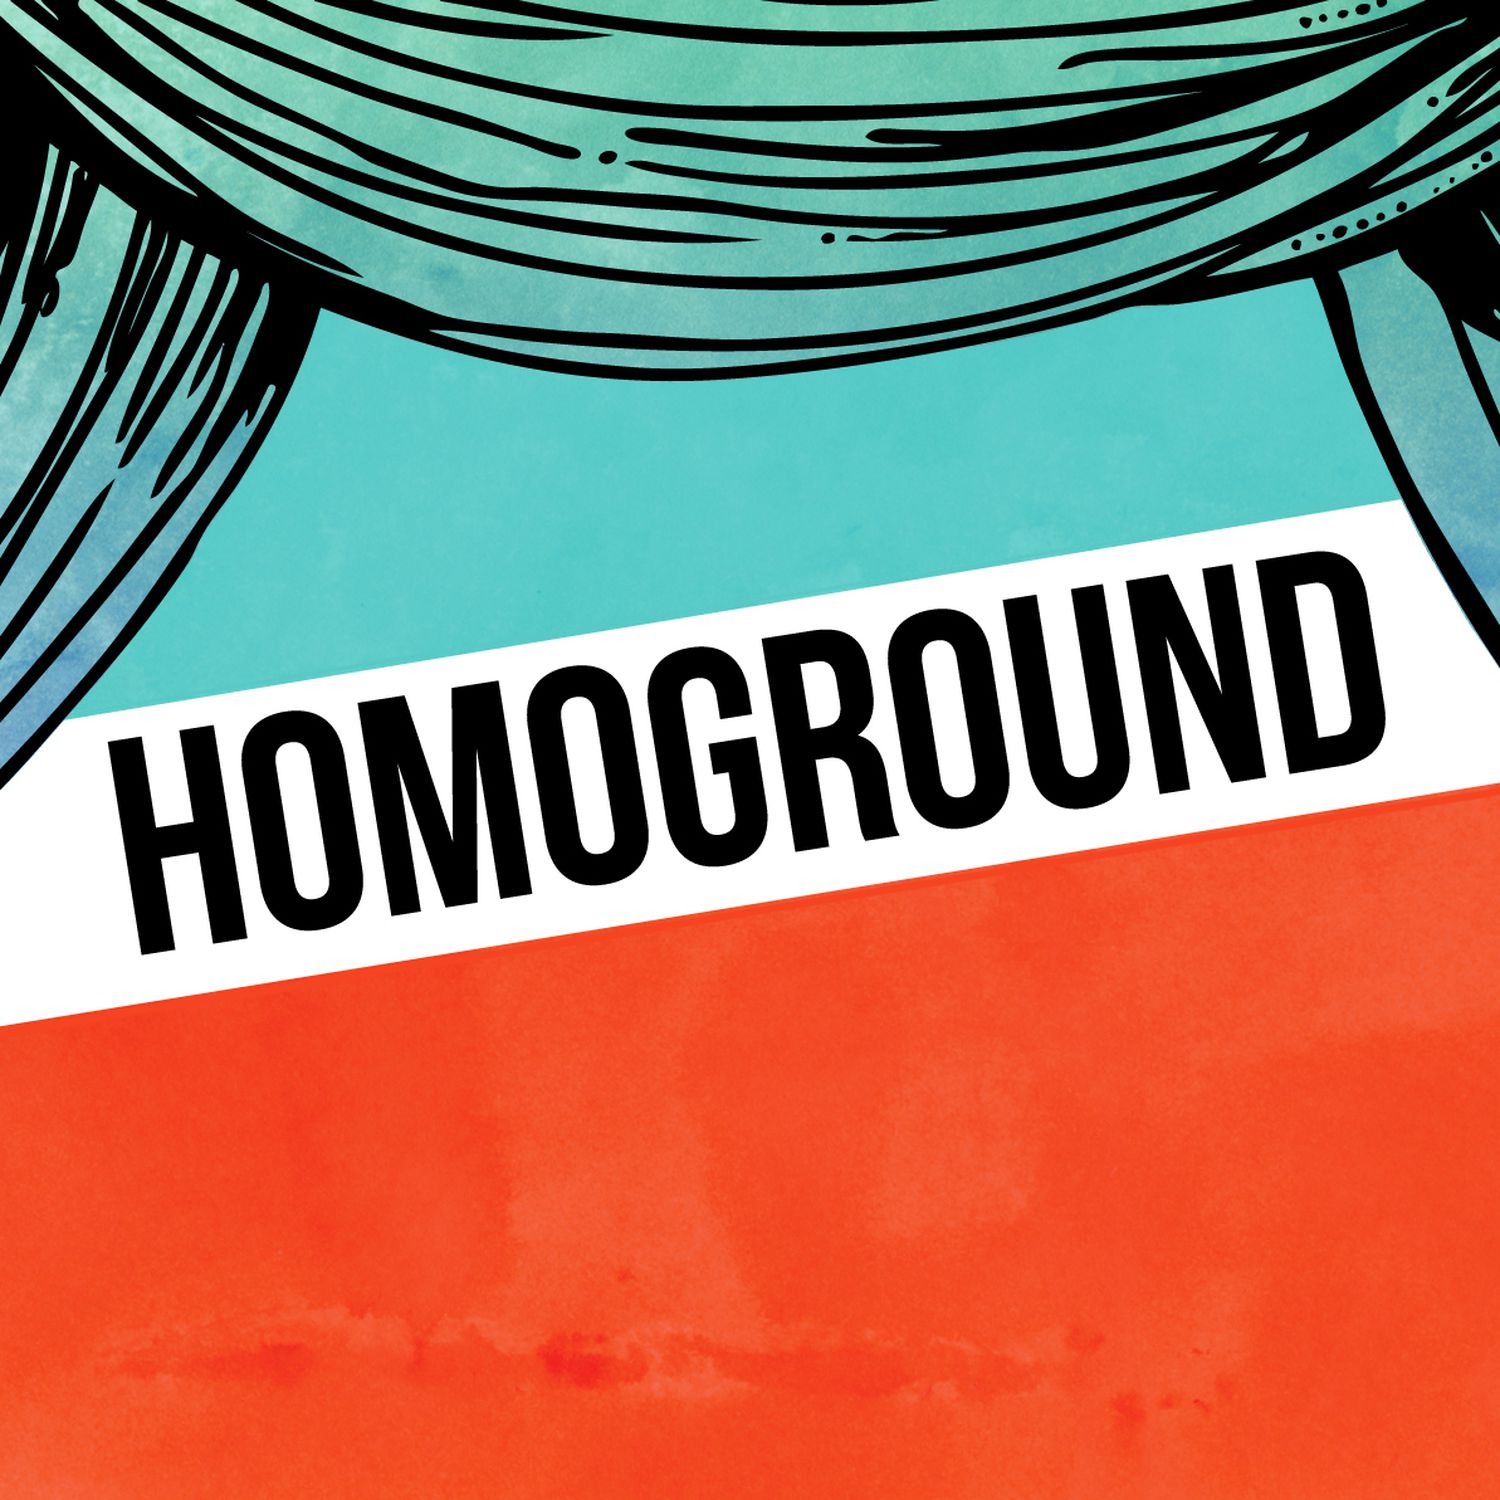 HOMOGROUND - queer music radio (LGBTQ):Homoground